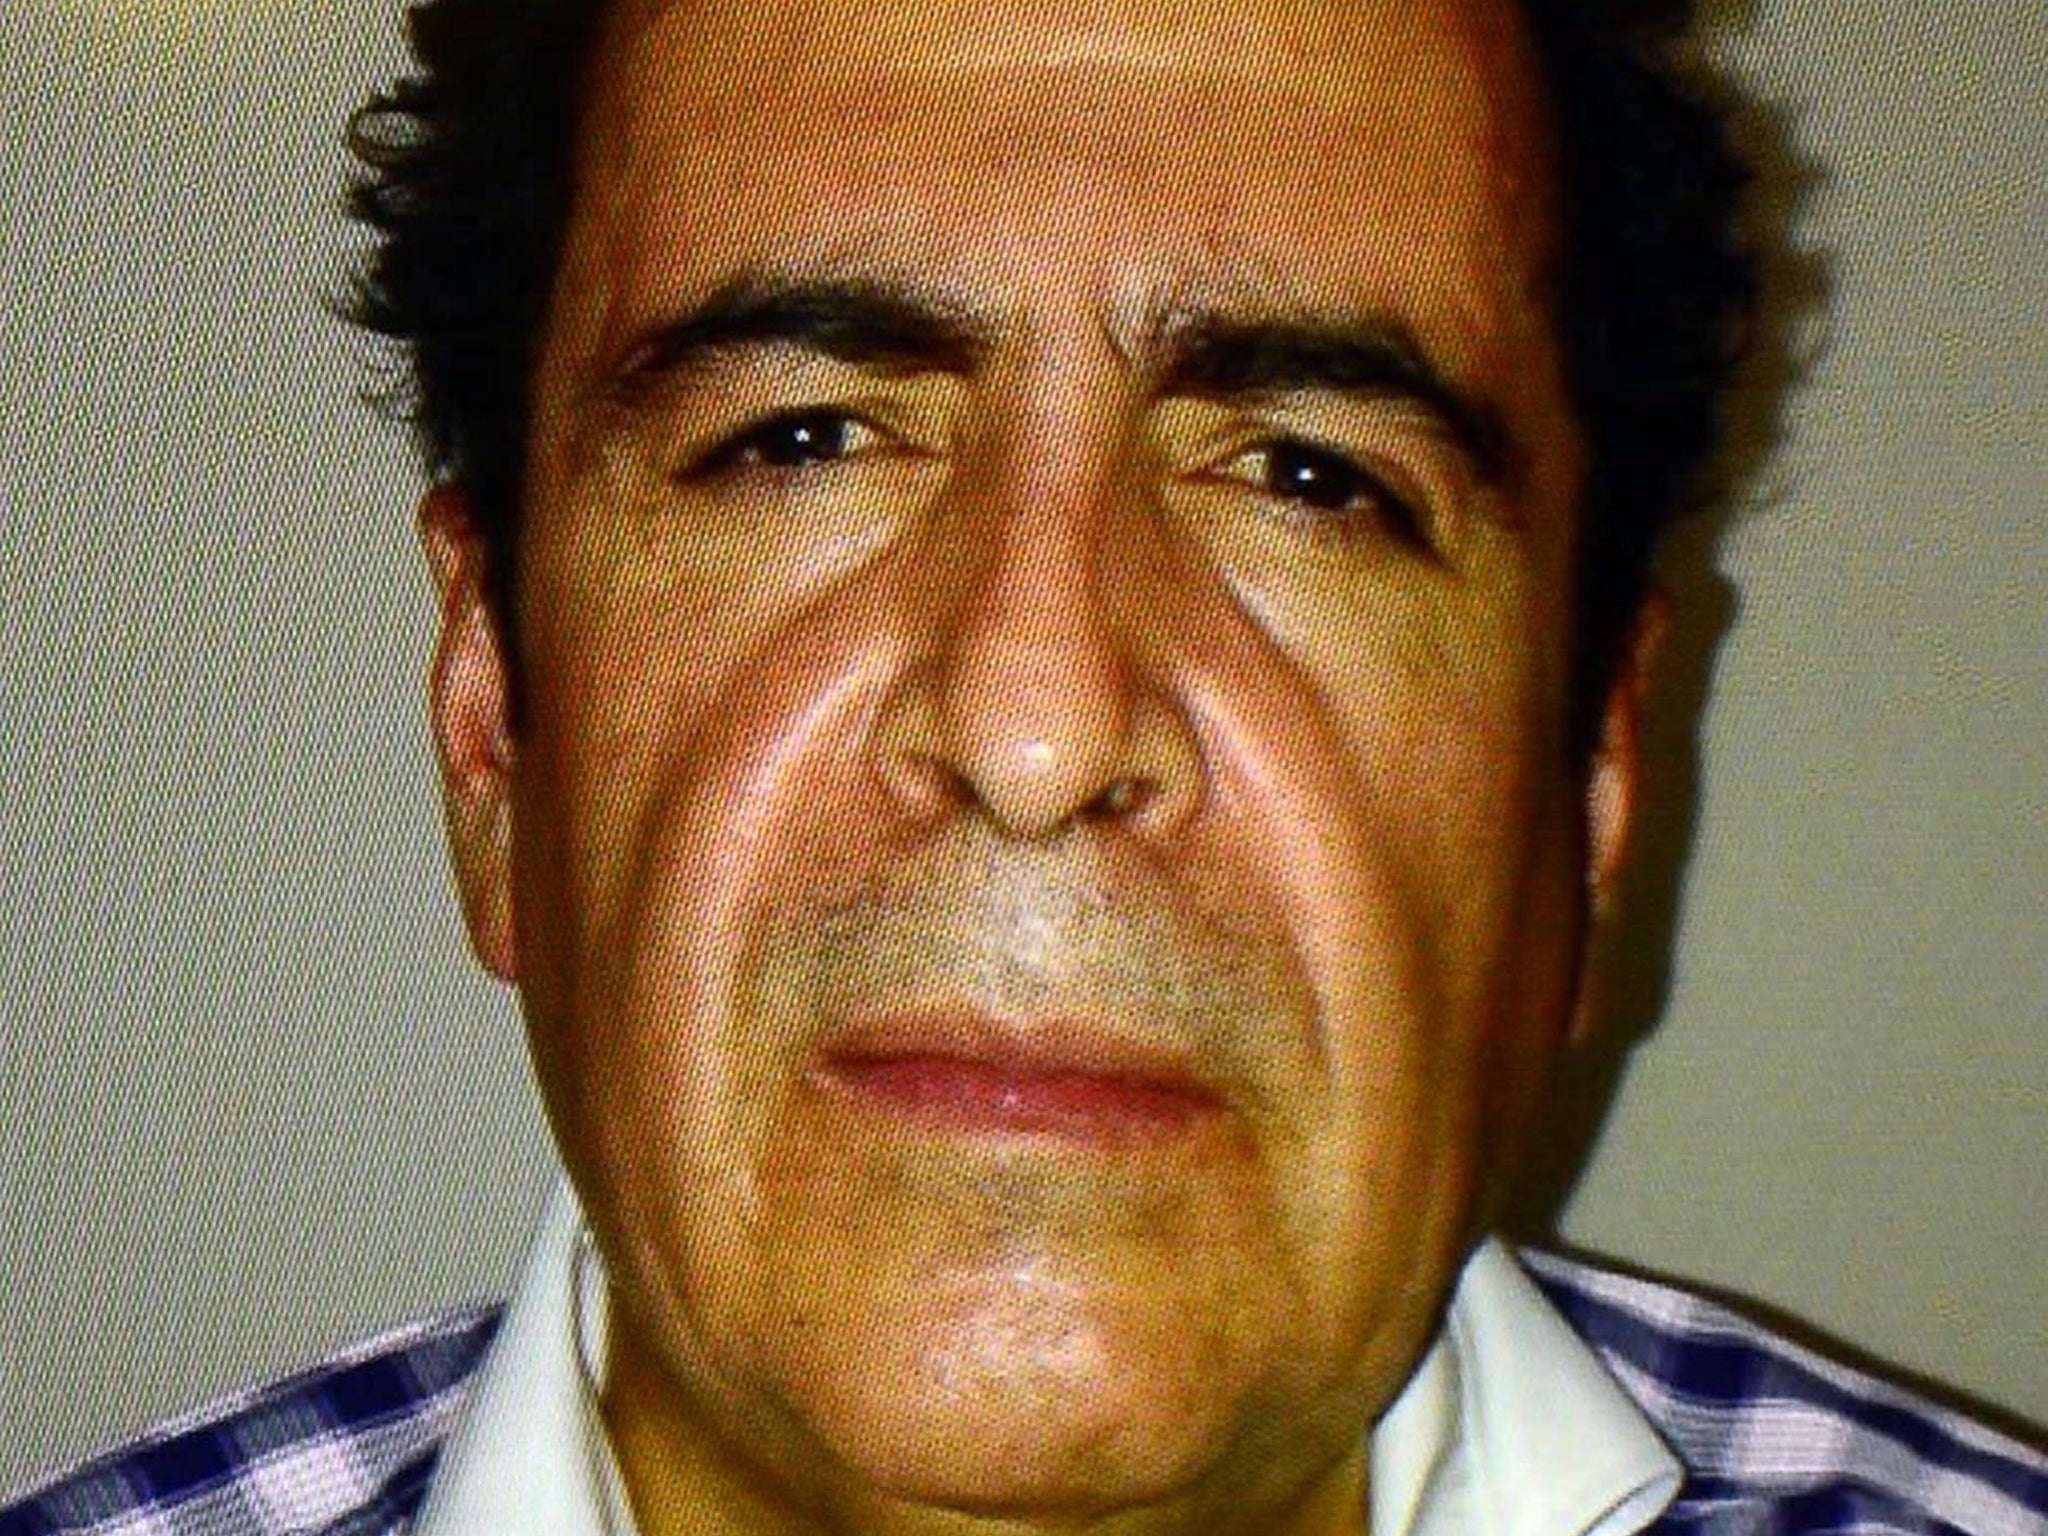 Hector Beltran Leyva was arrested in a restaurant